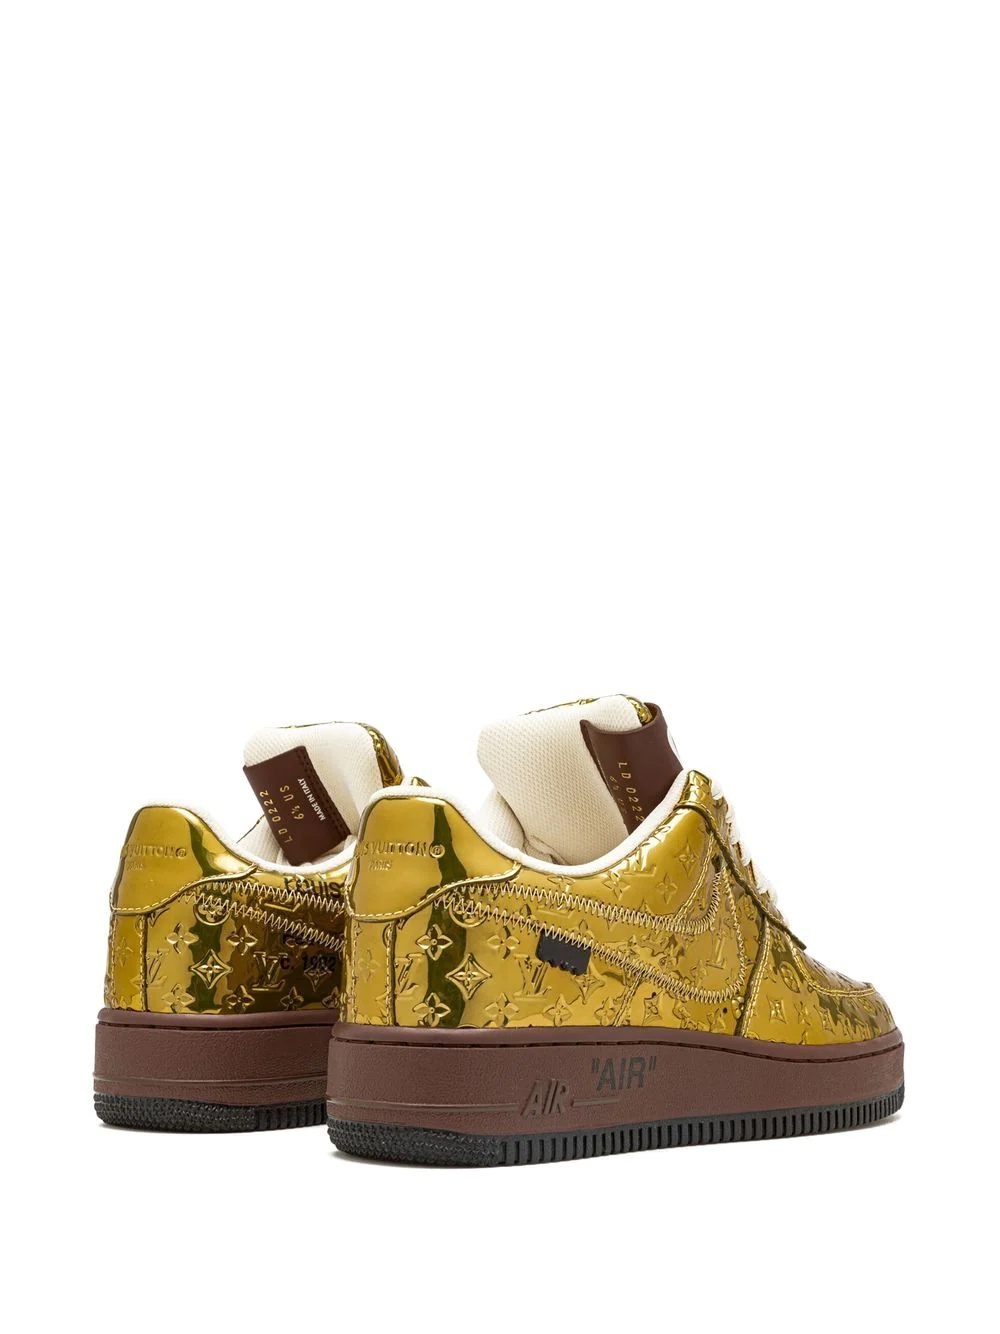 x Louis Vuitton Air Force 1 Low "Virgil Abloh - Metallic Gold" sneakers - 3